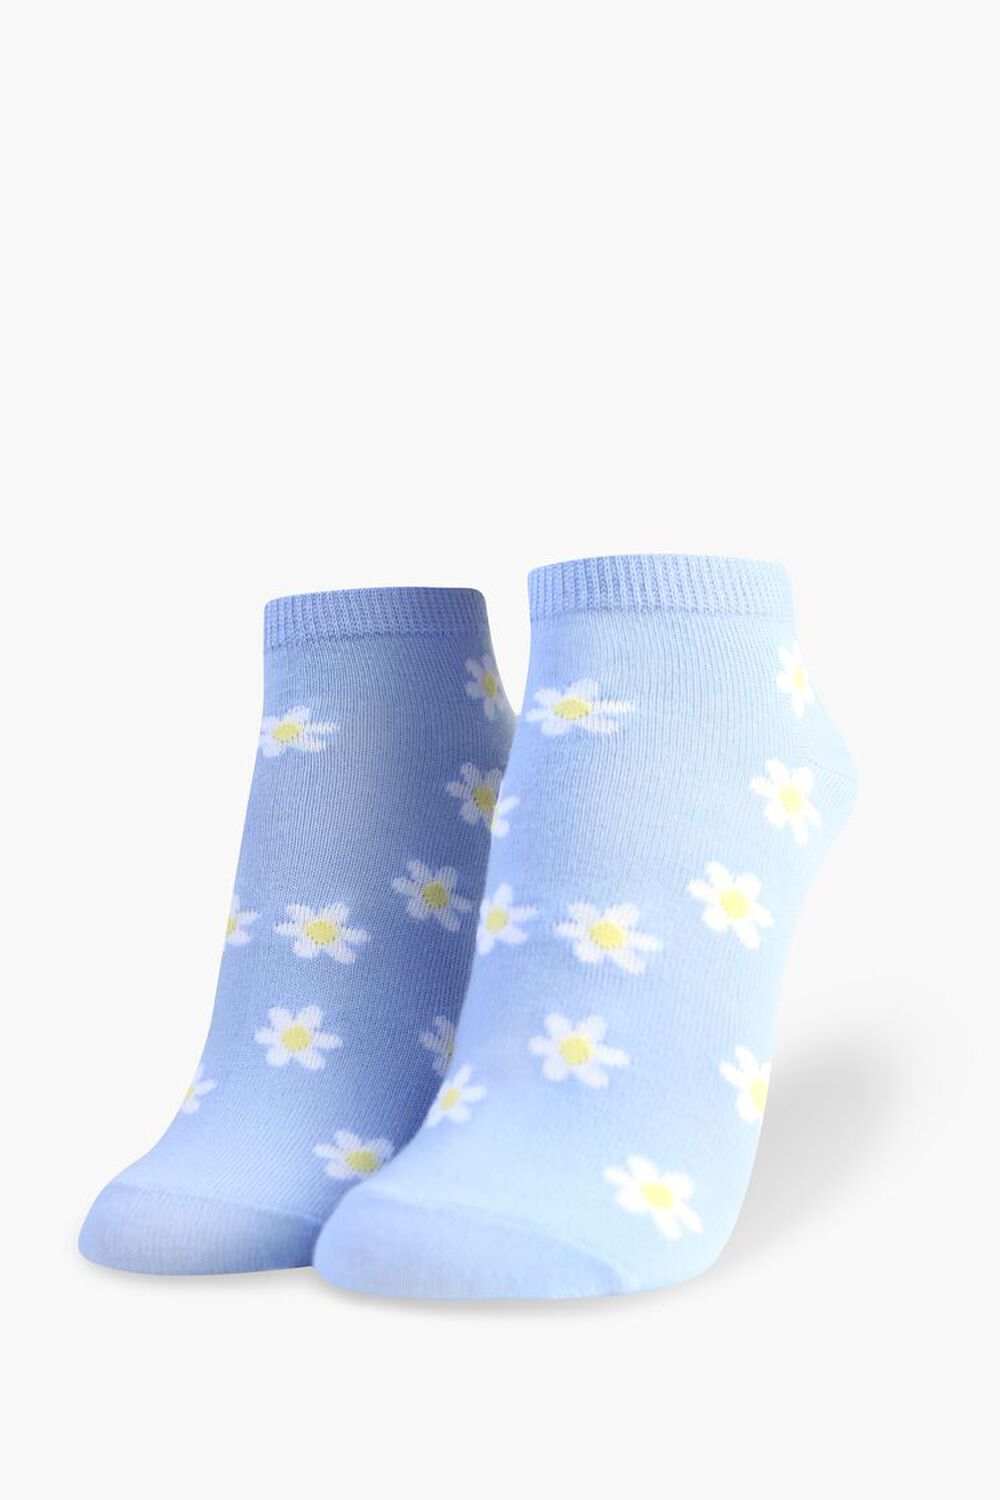 BLUE/WHITE Floral Print Ankle Socks, image 1